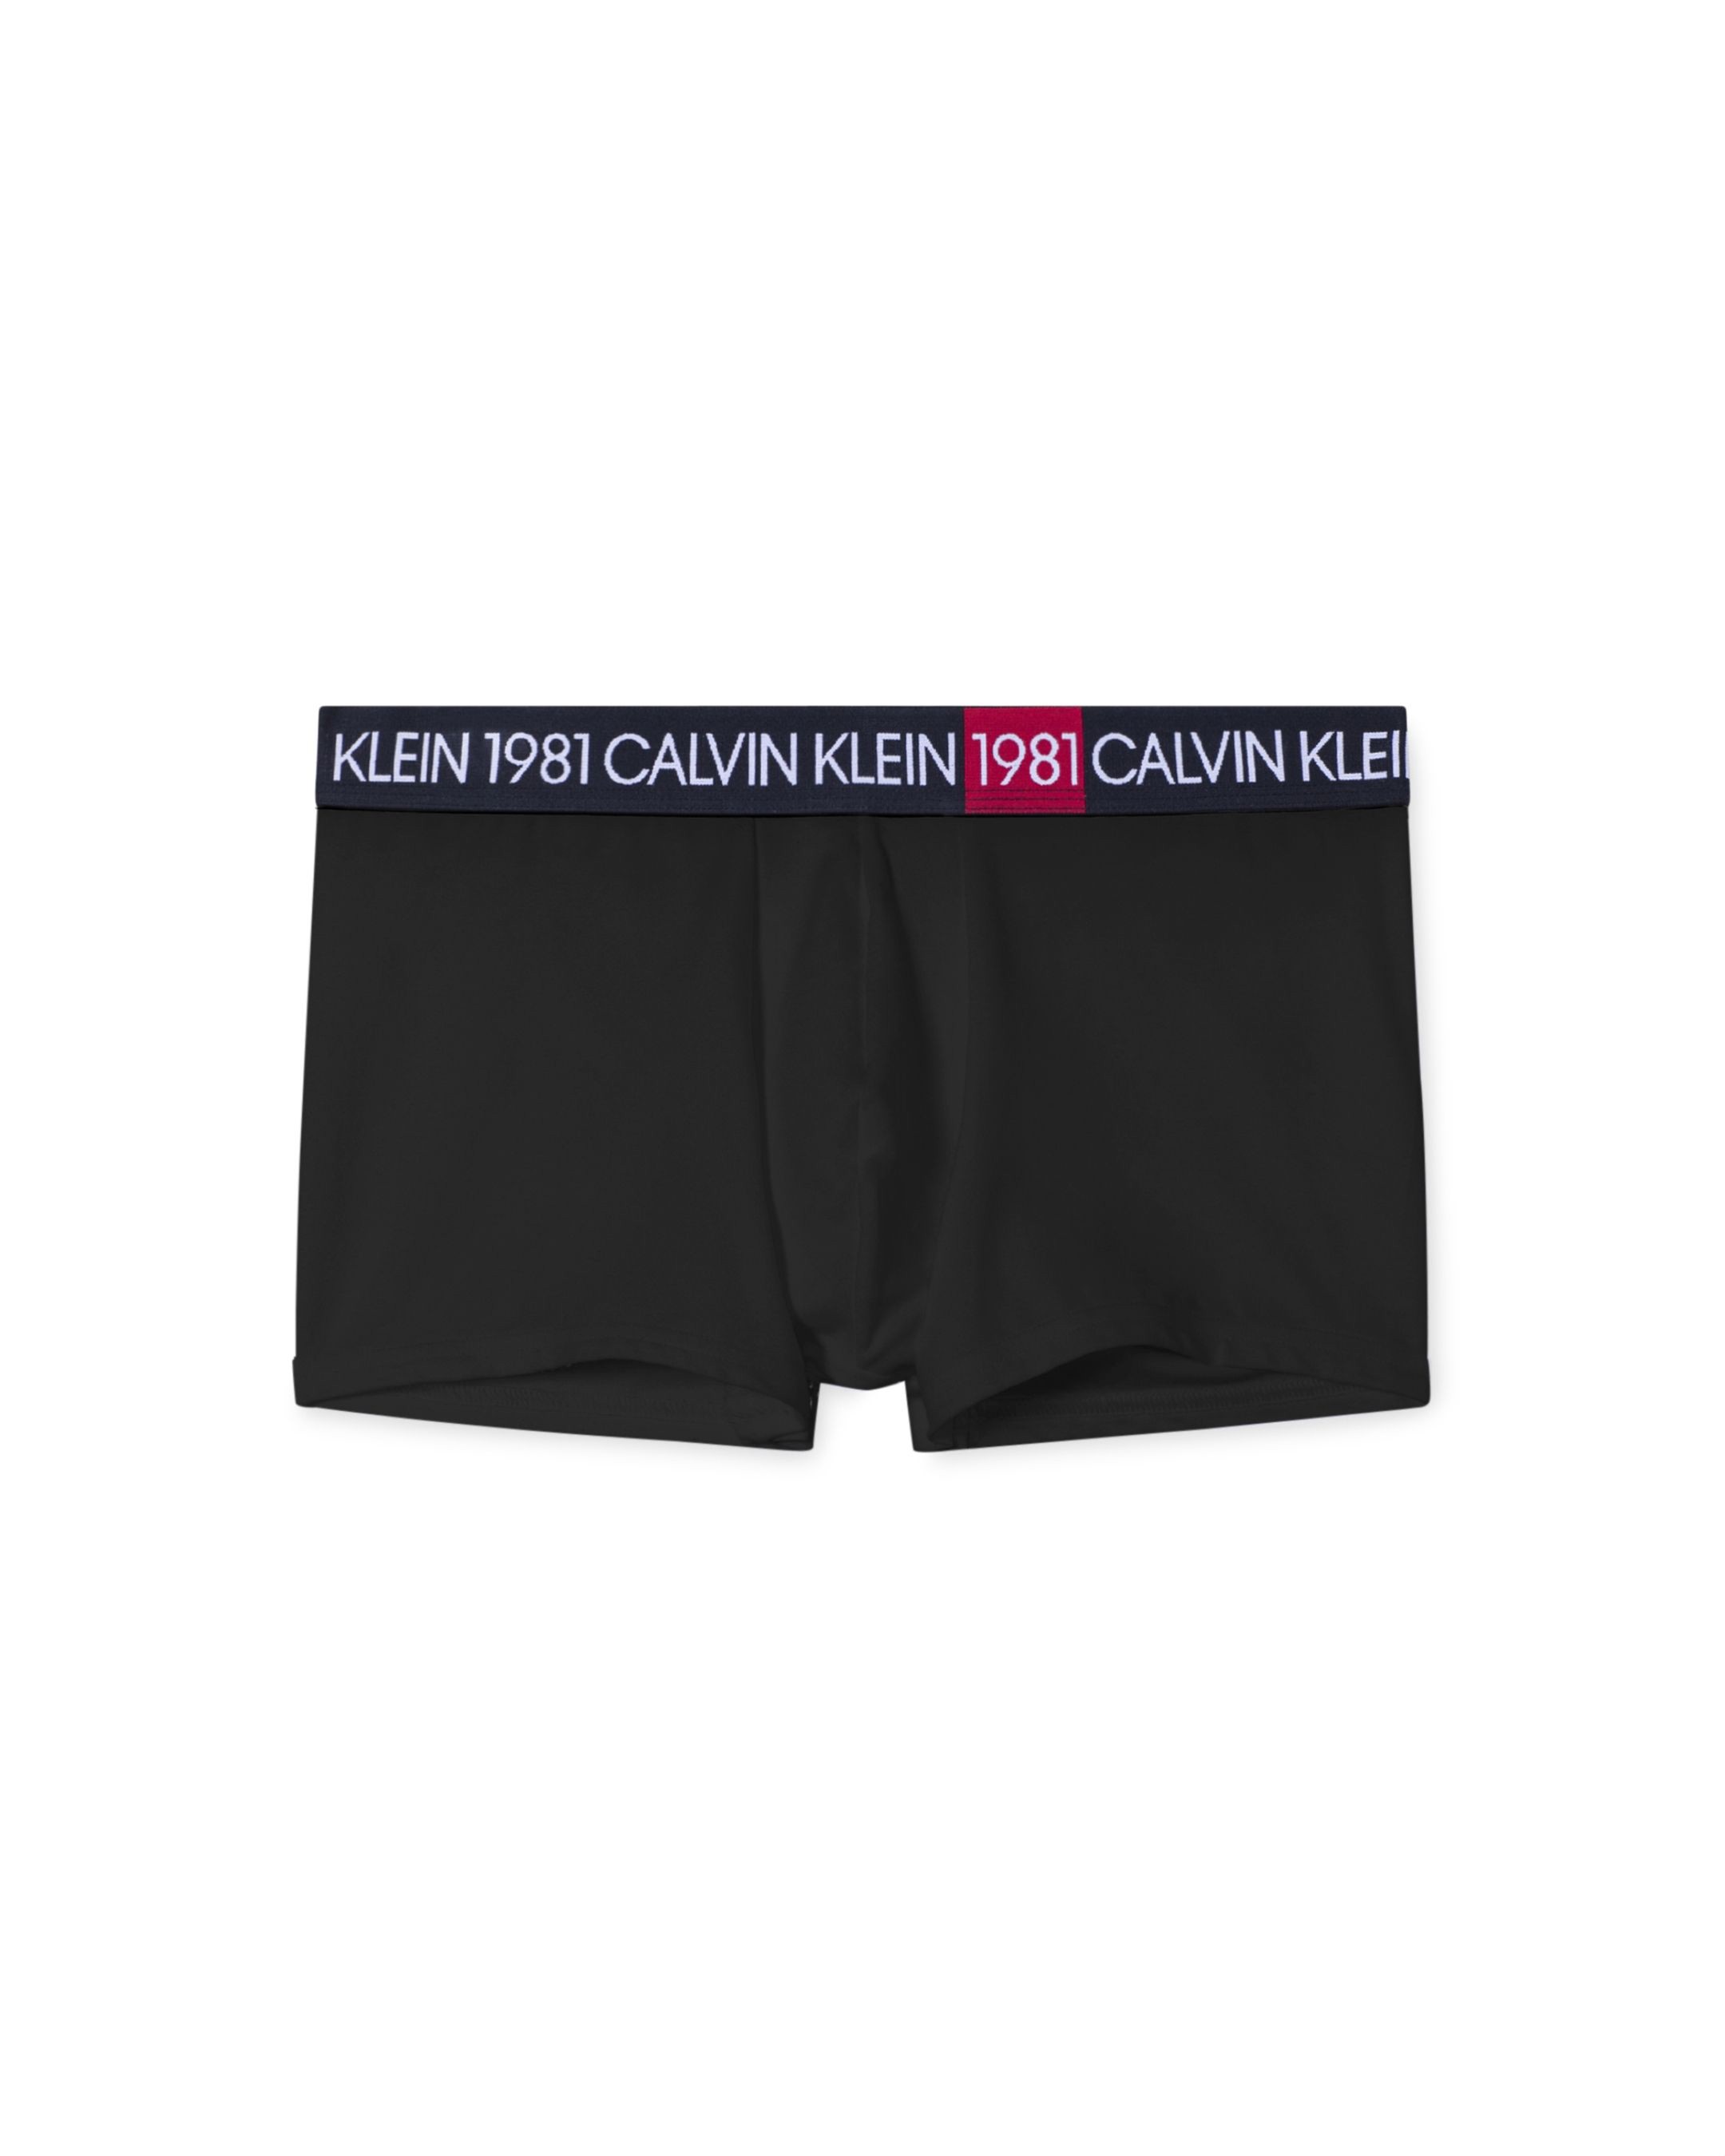 Calvin Klein Trunks NB2050 001 Black - New Collection Autumn Winter 2019 - 2020